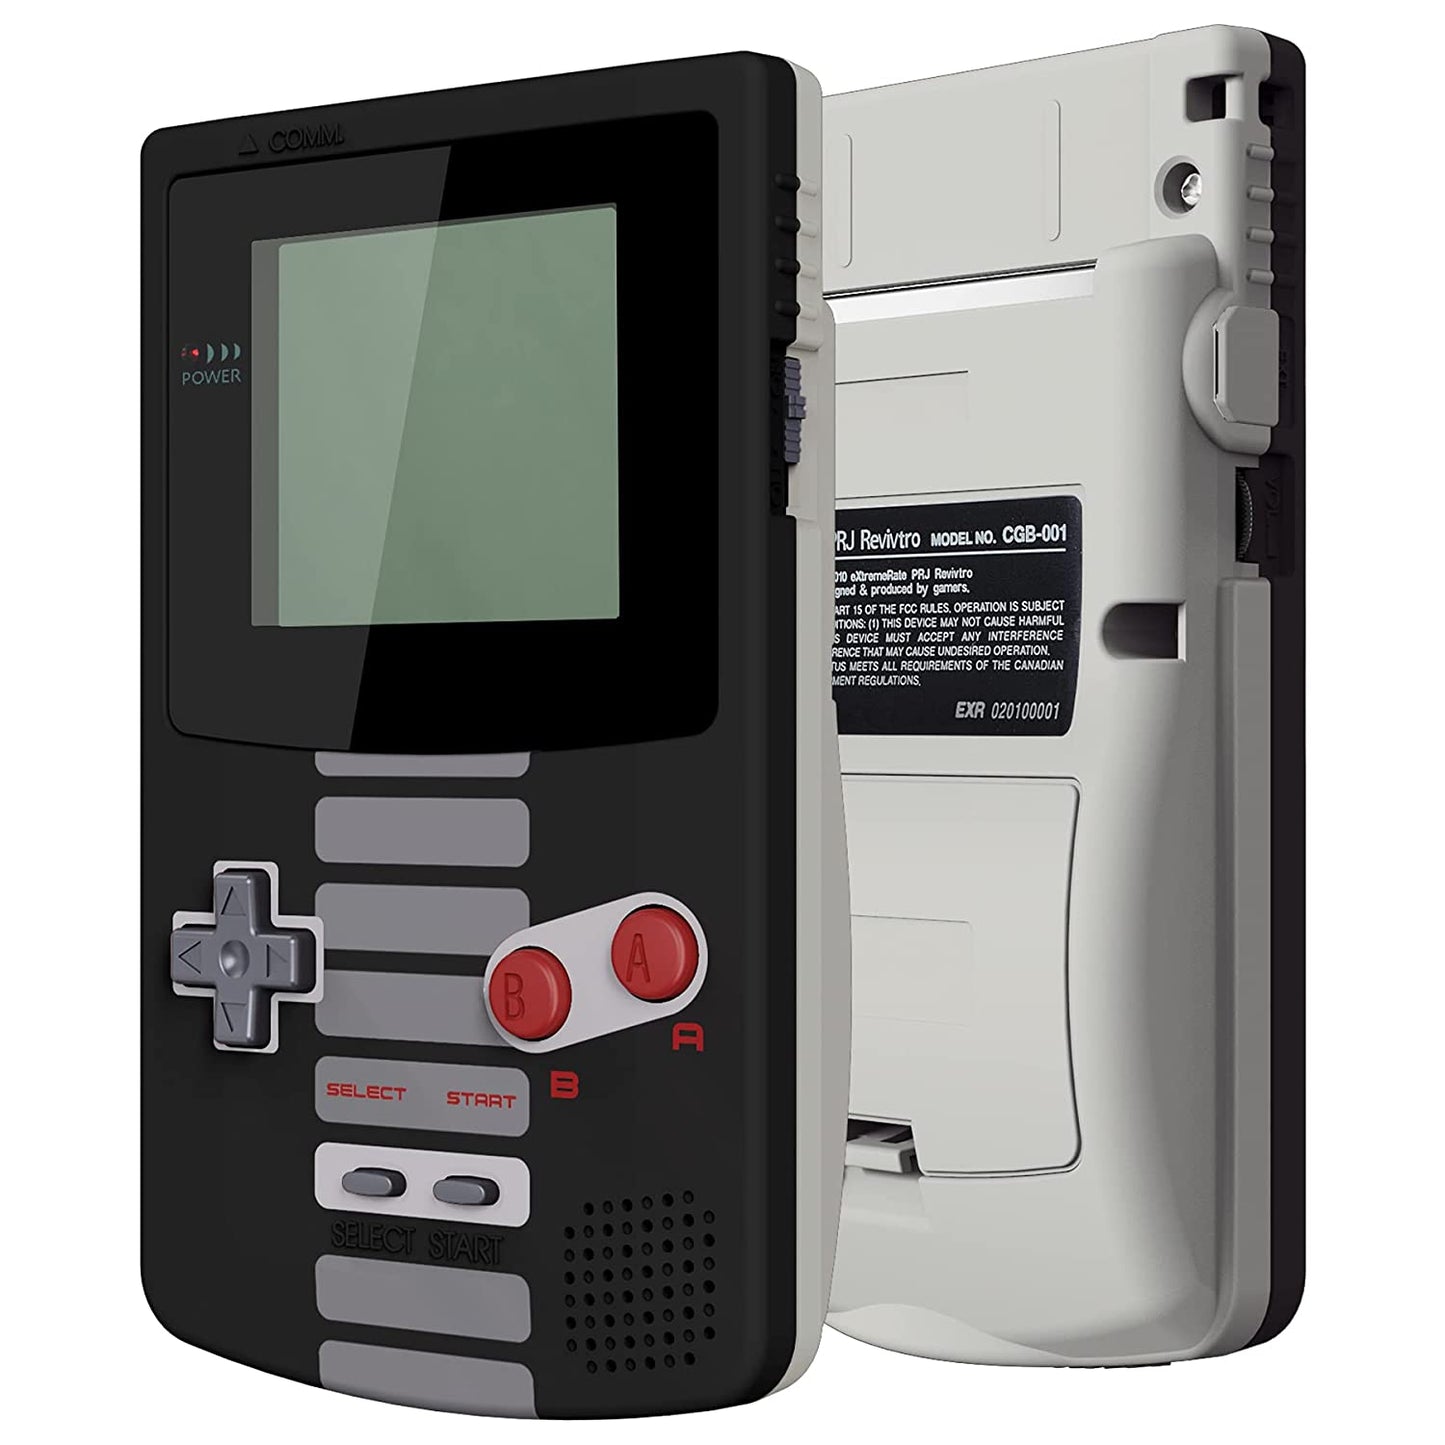 Custom Modded Gameboy Color - Nintendo Edition Console (Gameboy Color)